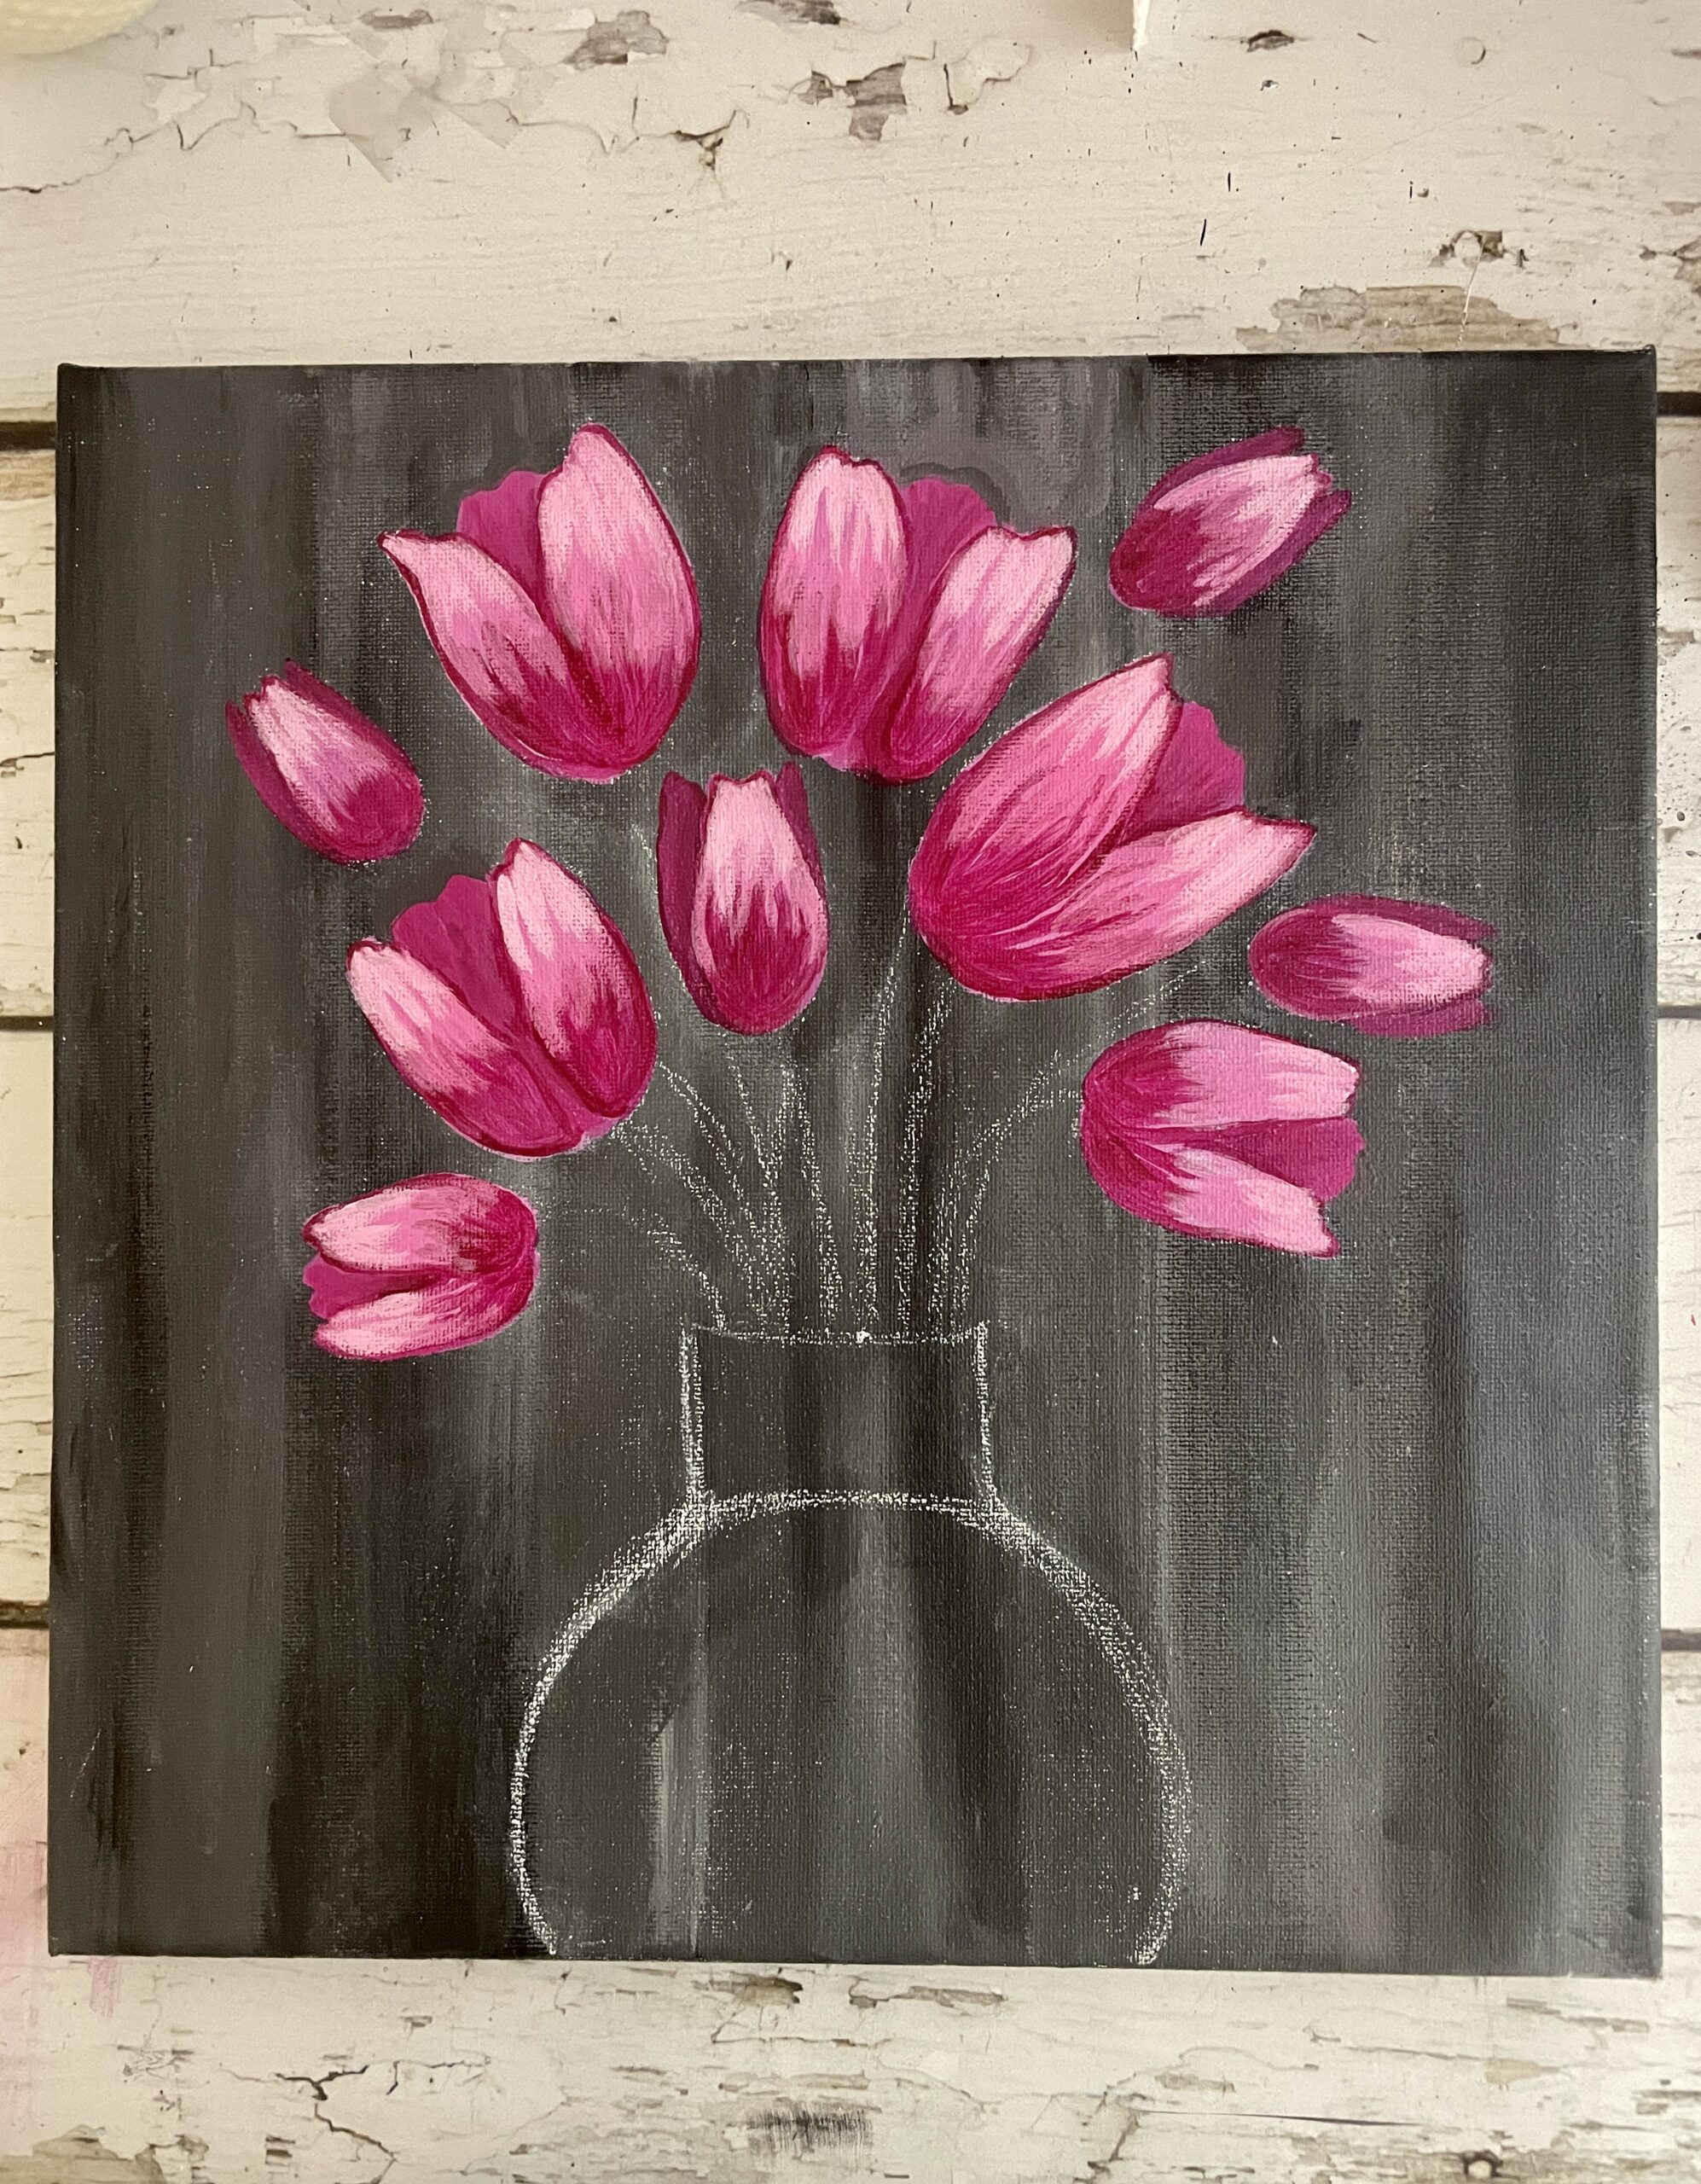 How ot paint tulips with acrylic